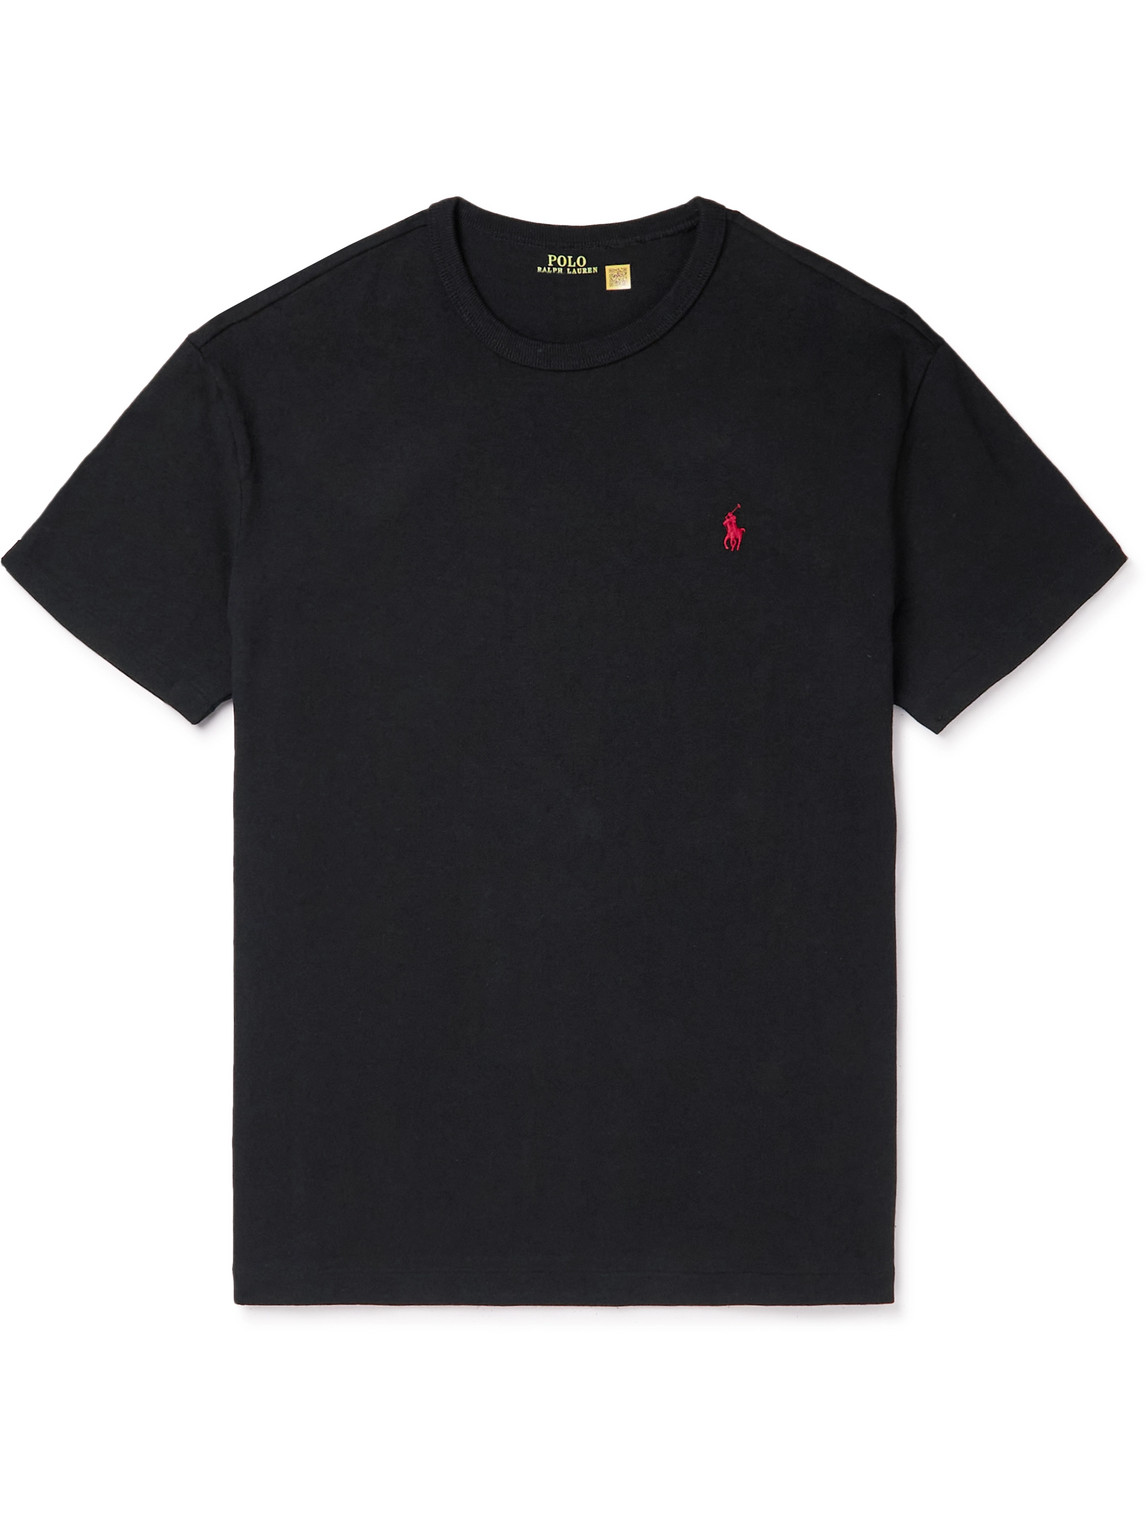 Polo Ralph Lauren - Logo-Embroidered Cotton-Jersey T-Shirt - Men - Black - L von Polo Ralph Lauren